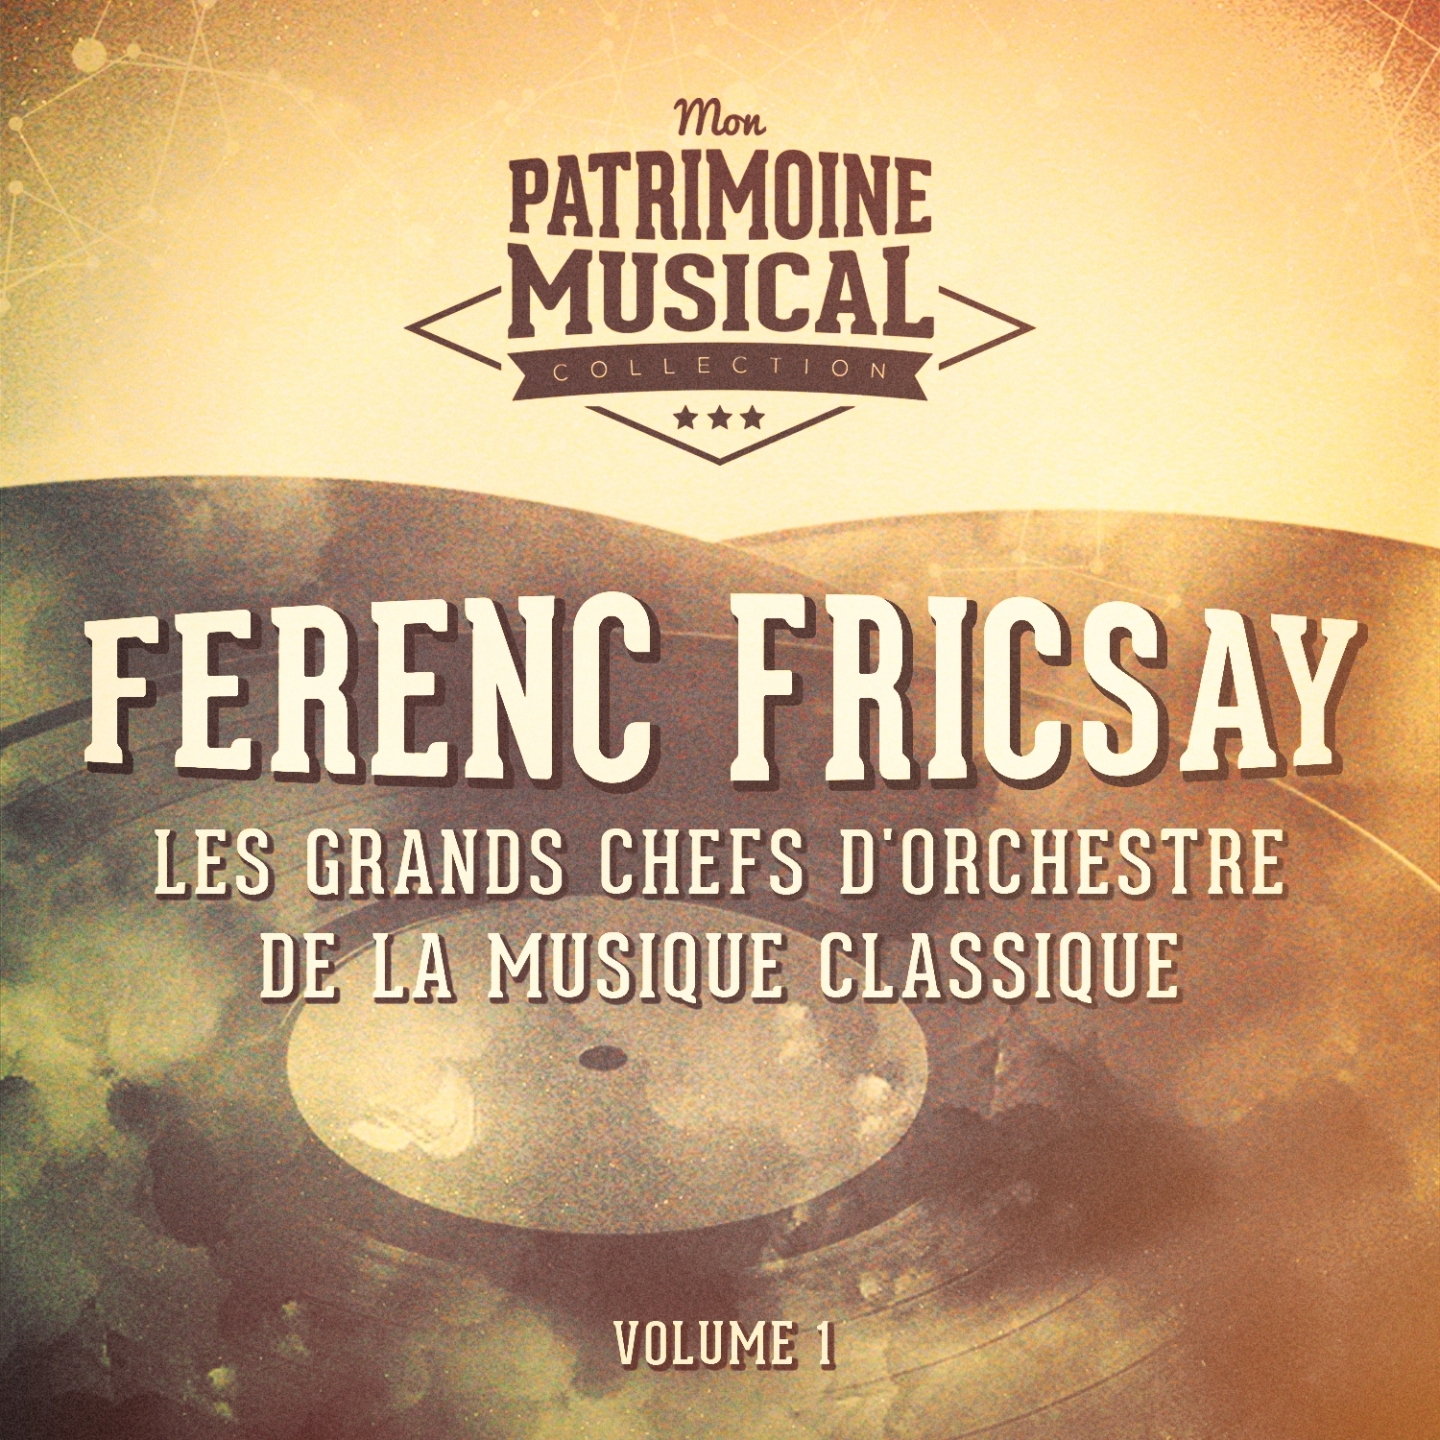 Les grands chefs d'orchestre de la musique classique : Ferenc Fricsay, Vol. 1